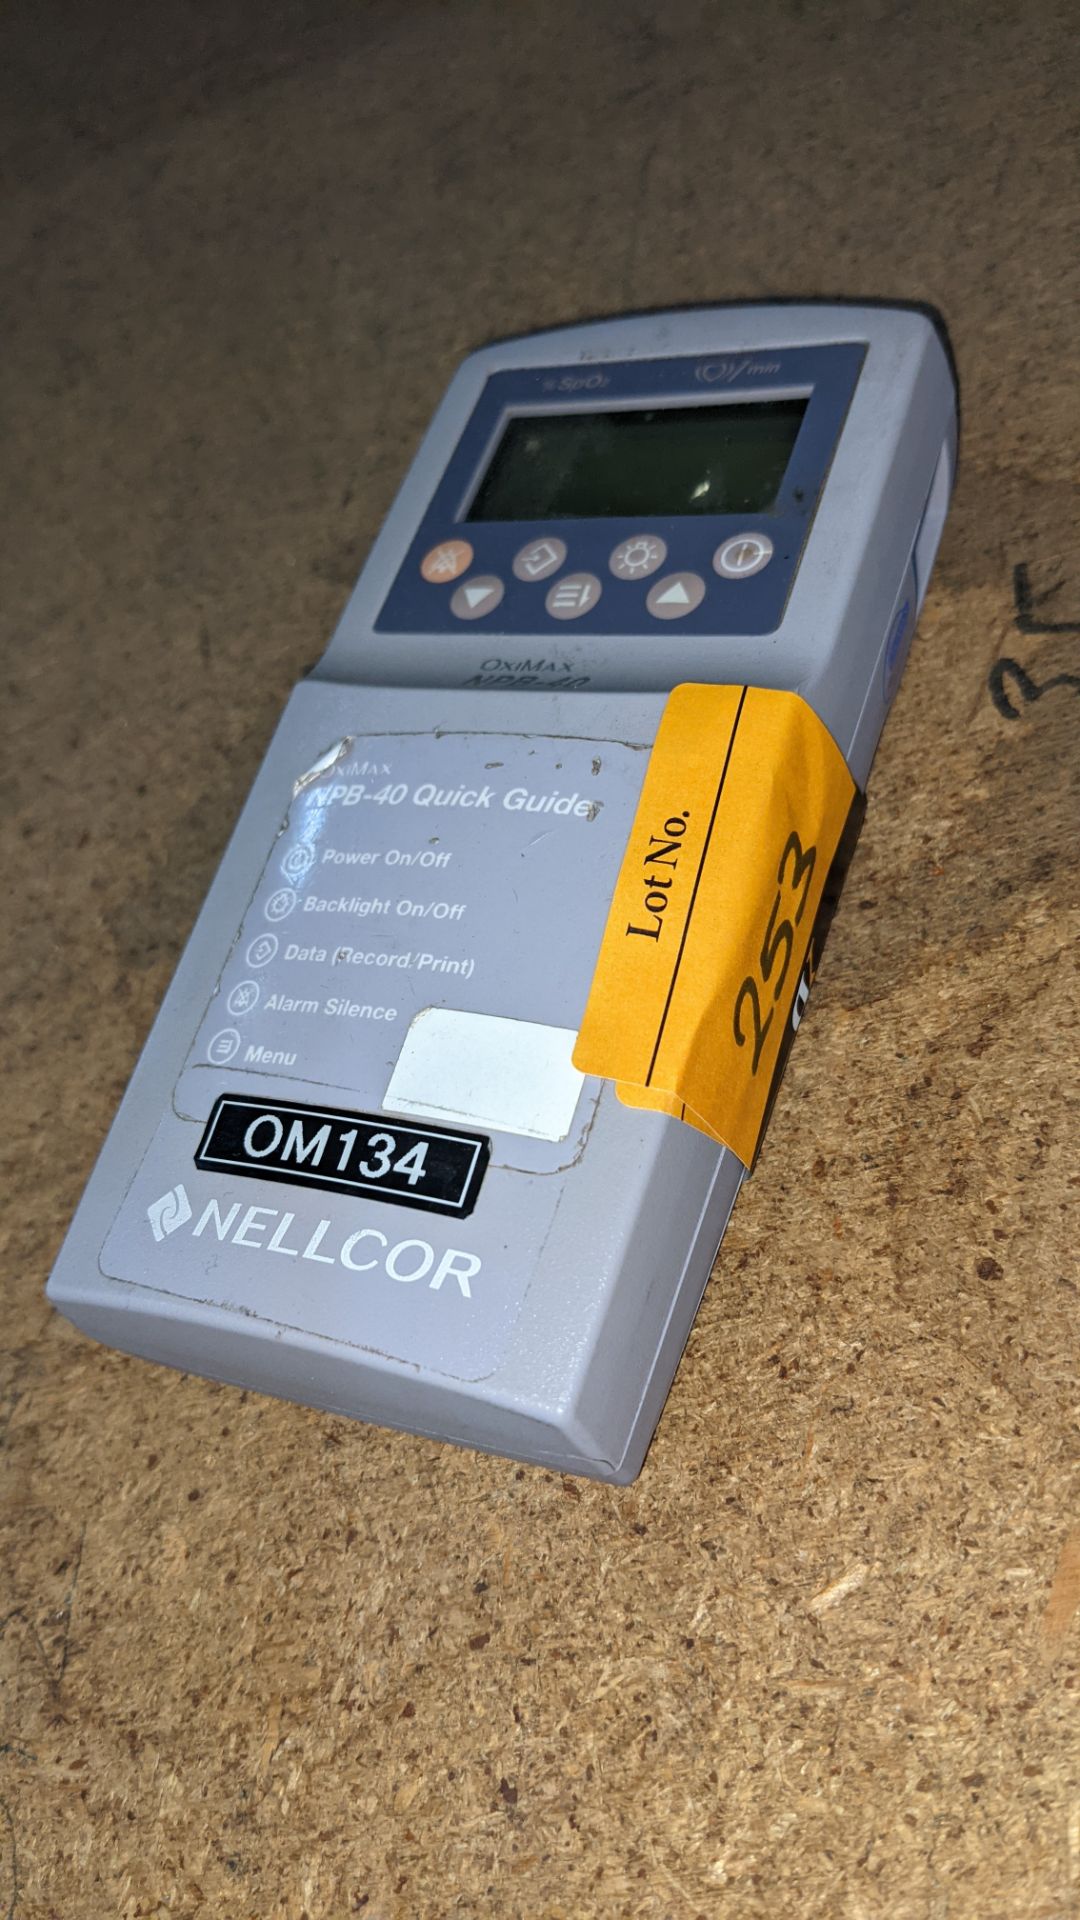 Nellcore Oximax model NPB-40 handheld pulse oximeter